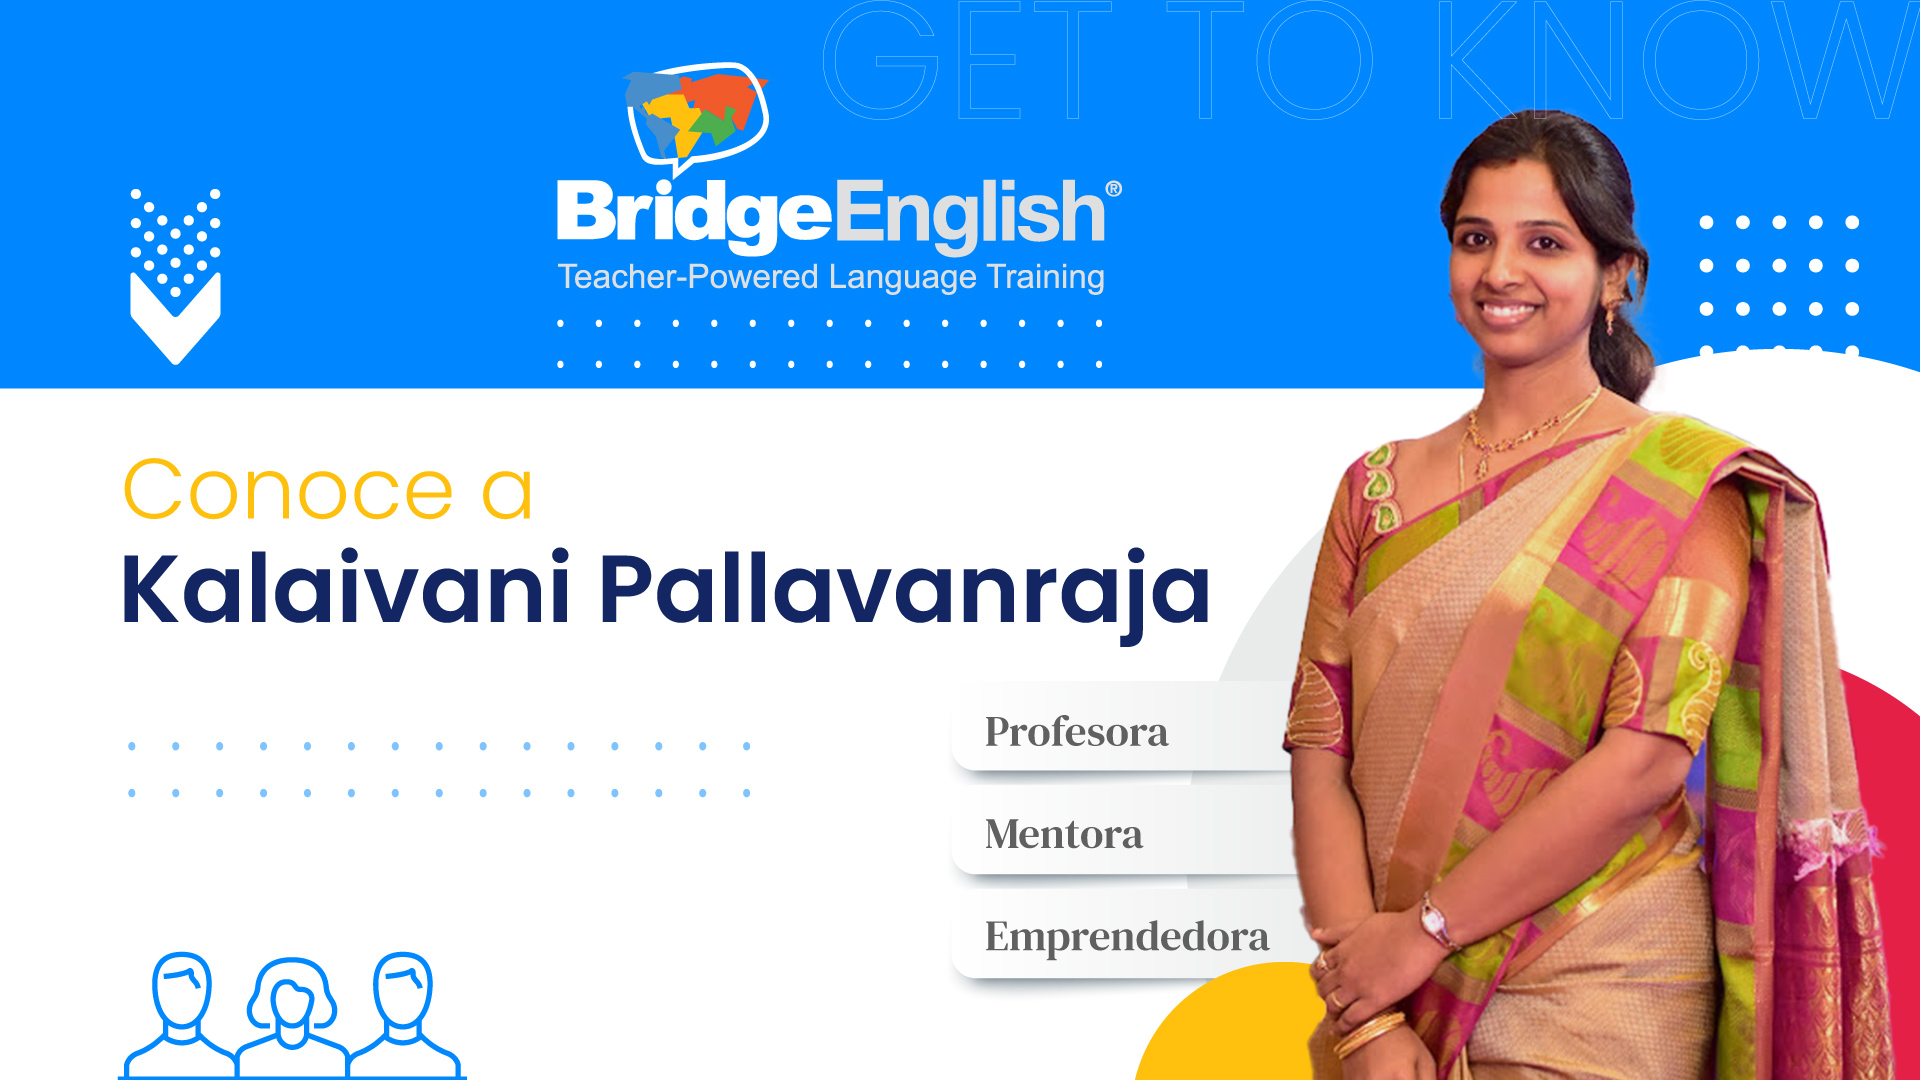 Conoce a la emprendedora y políglota, Kalaivani Pallavanraja: profesora de BridgeEnglish “que nació para enseñar”